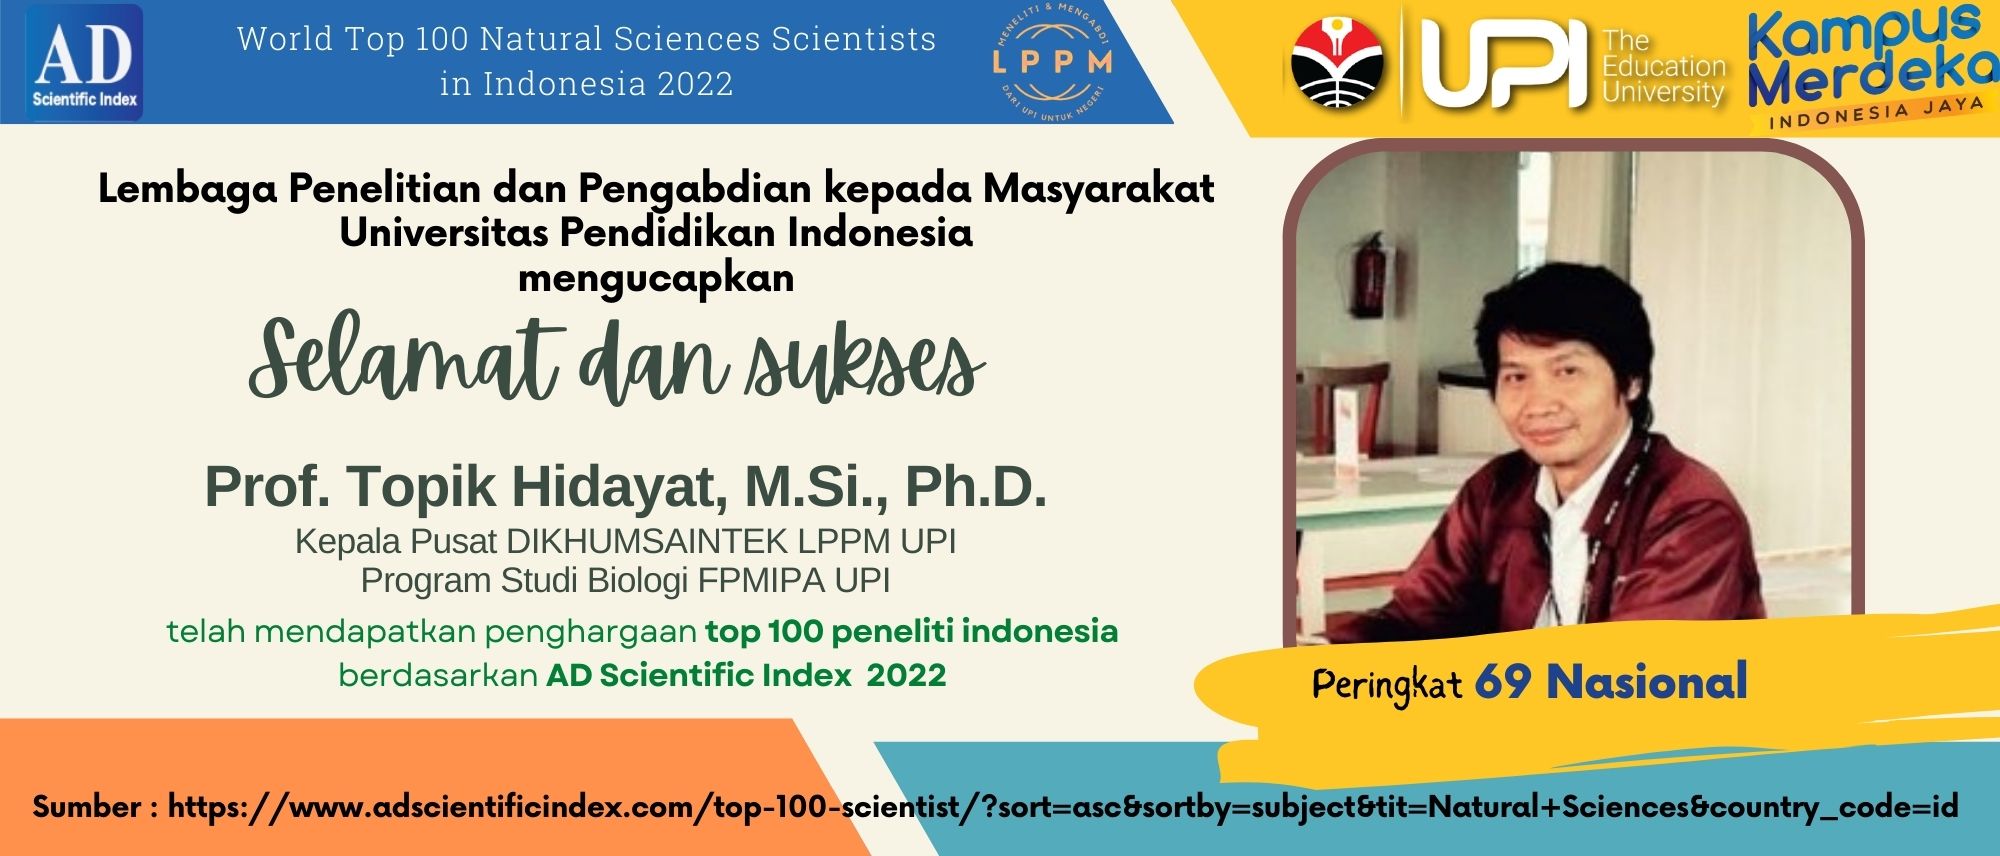 World Top 100 Natural Sciences Scientists in Indonesia 2022 : Prof. Topik Hidayat, M.Si., Ph.D.